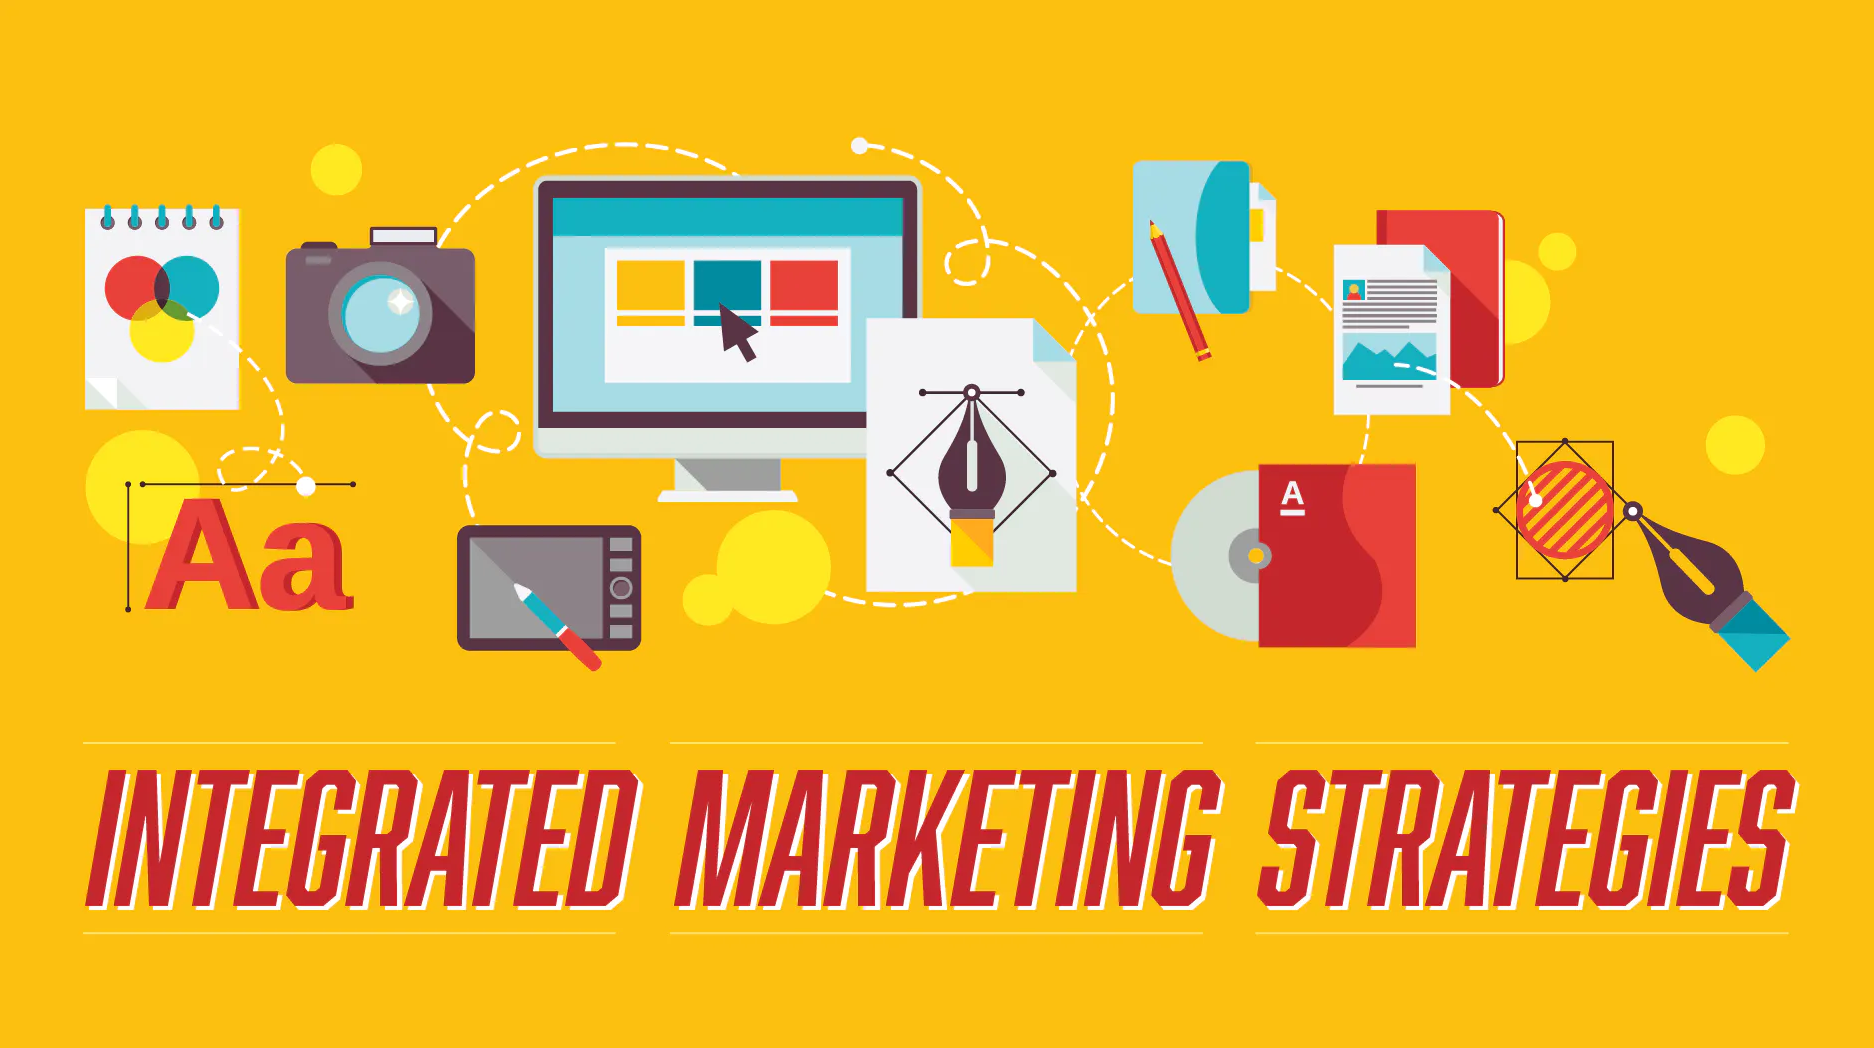 Integrated marketing strategies